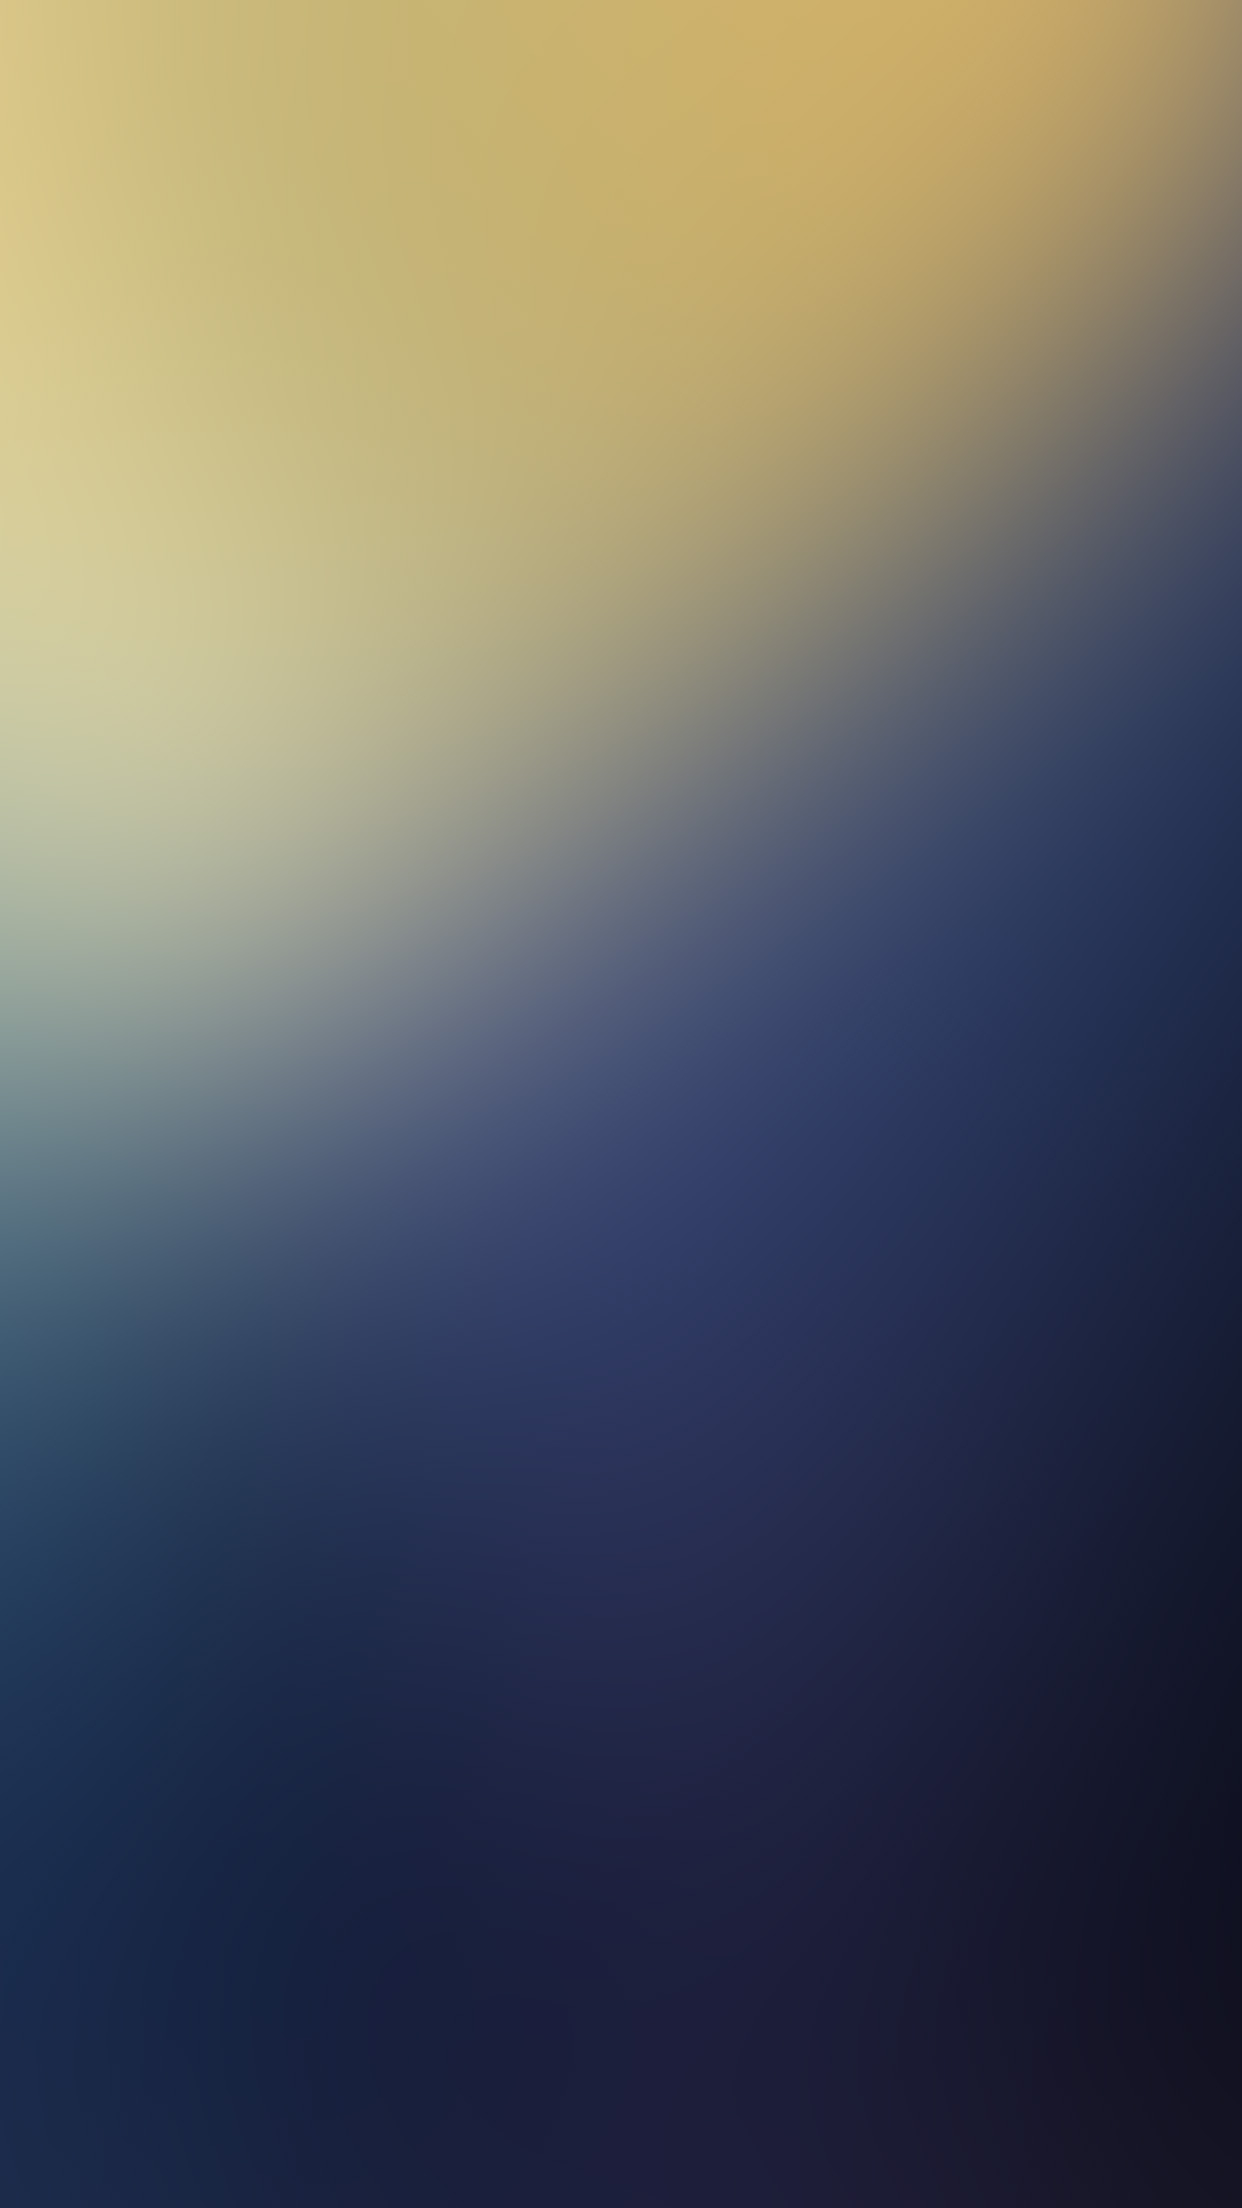 1242x2208 | iPhone X wallpaper | sj48-official-night-blue-dark- yellow-gradation-blur